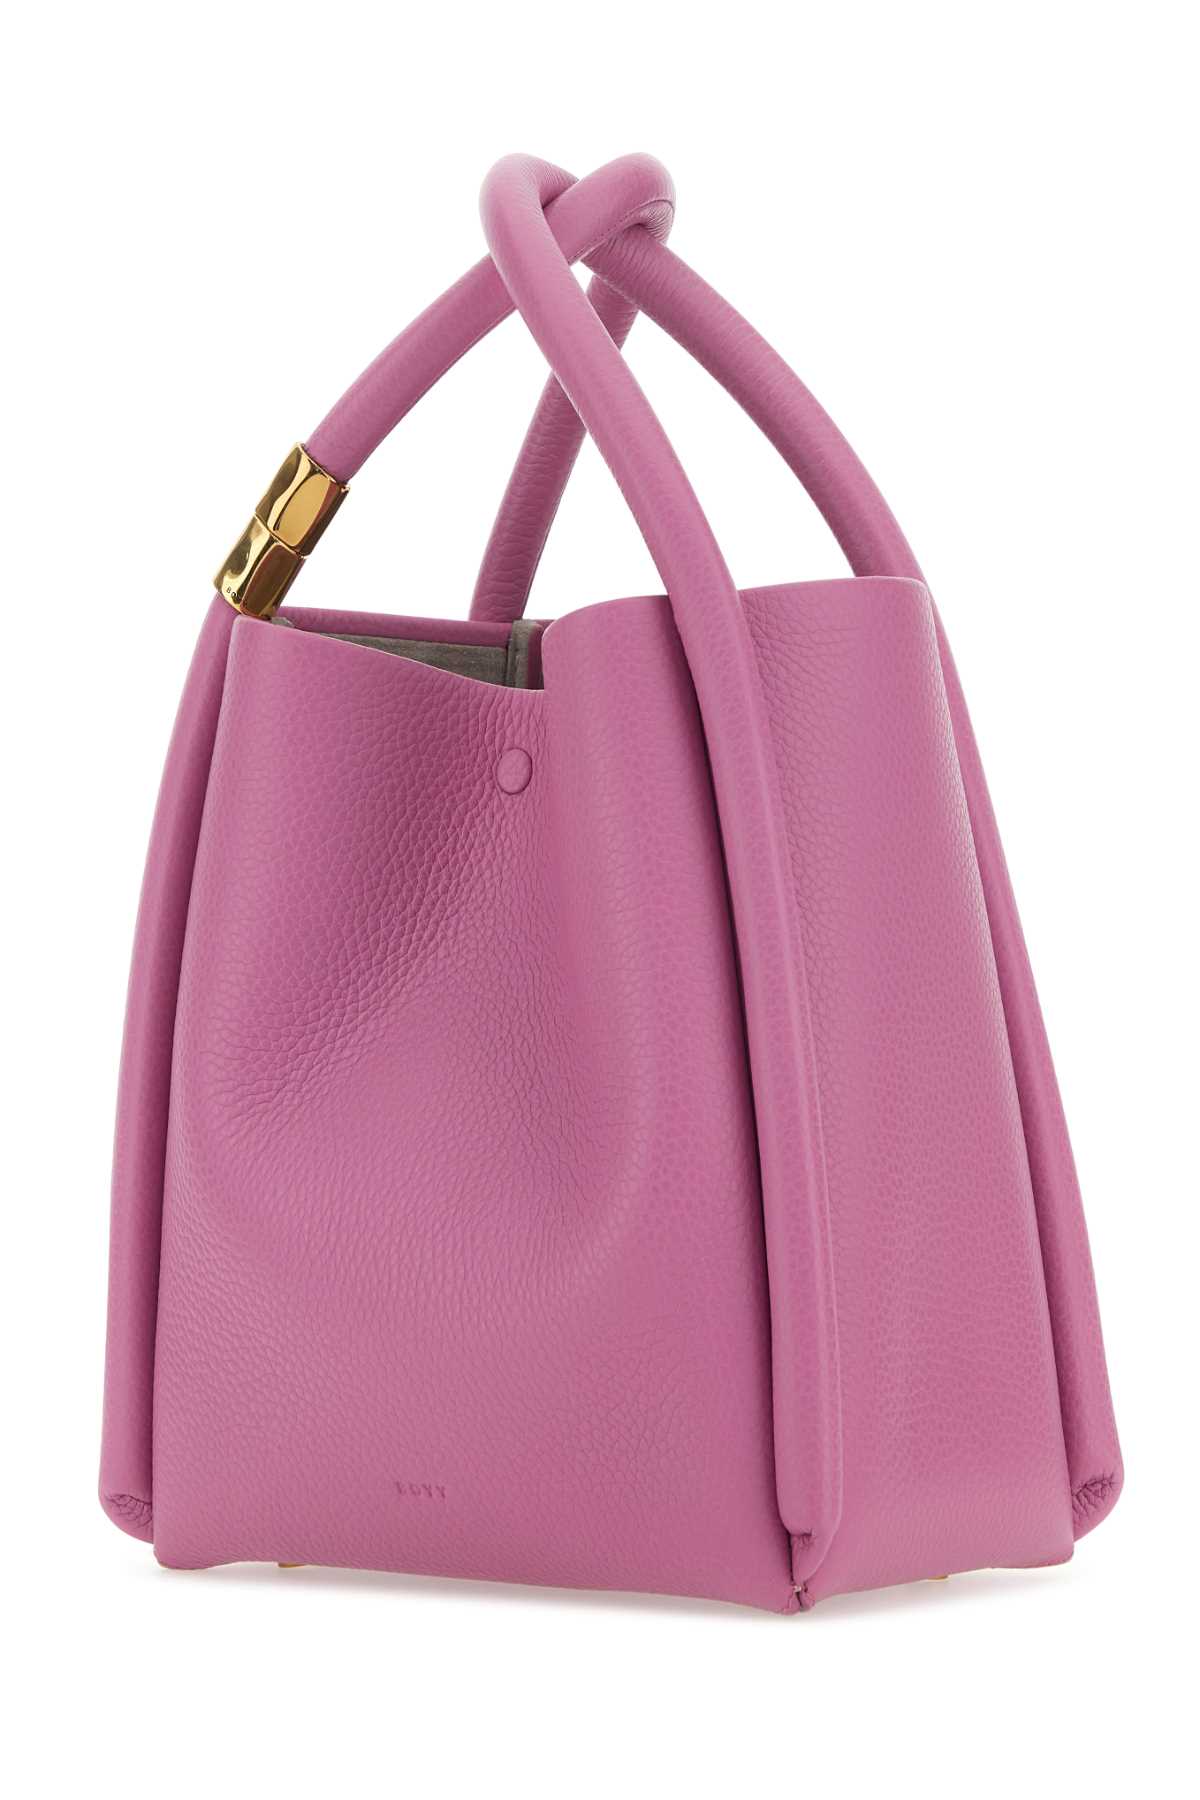 Boyy Dark Pink Leather Lotus 20 Handbag In Putty